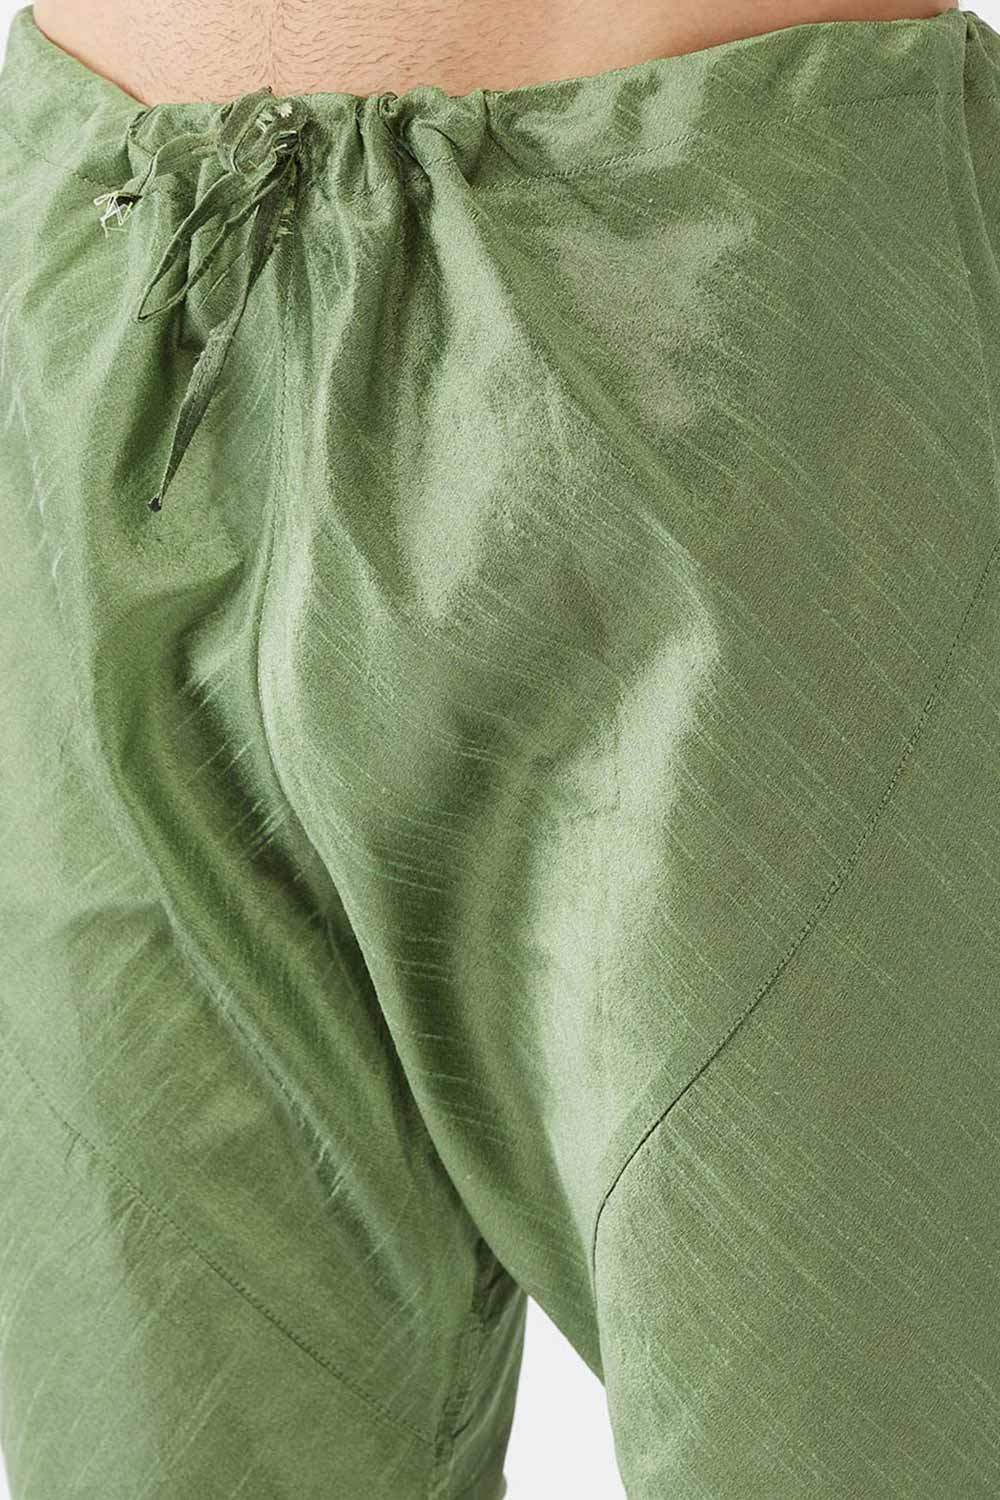 Buy Men's Blended Silk Solid Churidar in Mint Green - Side